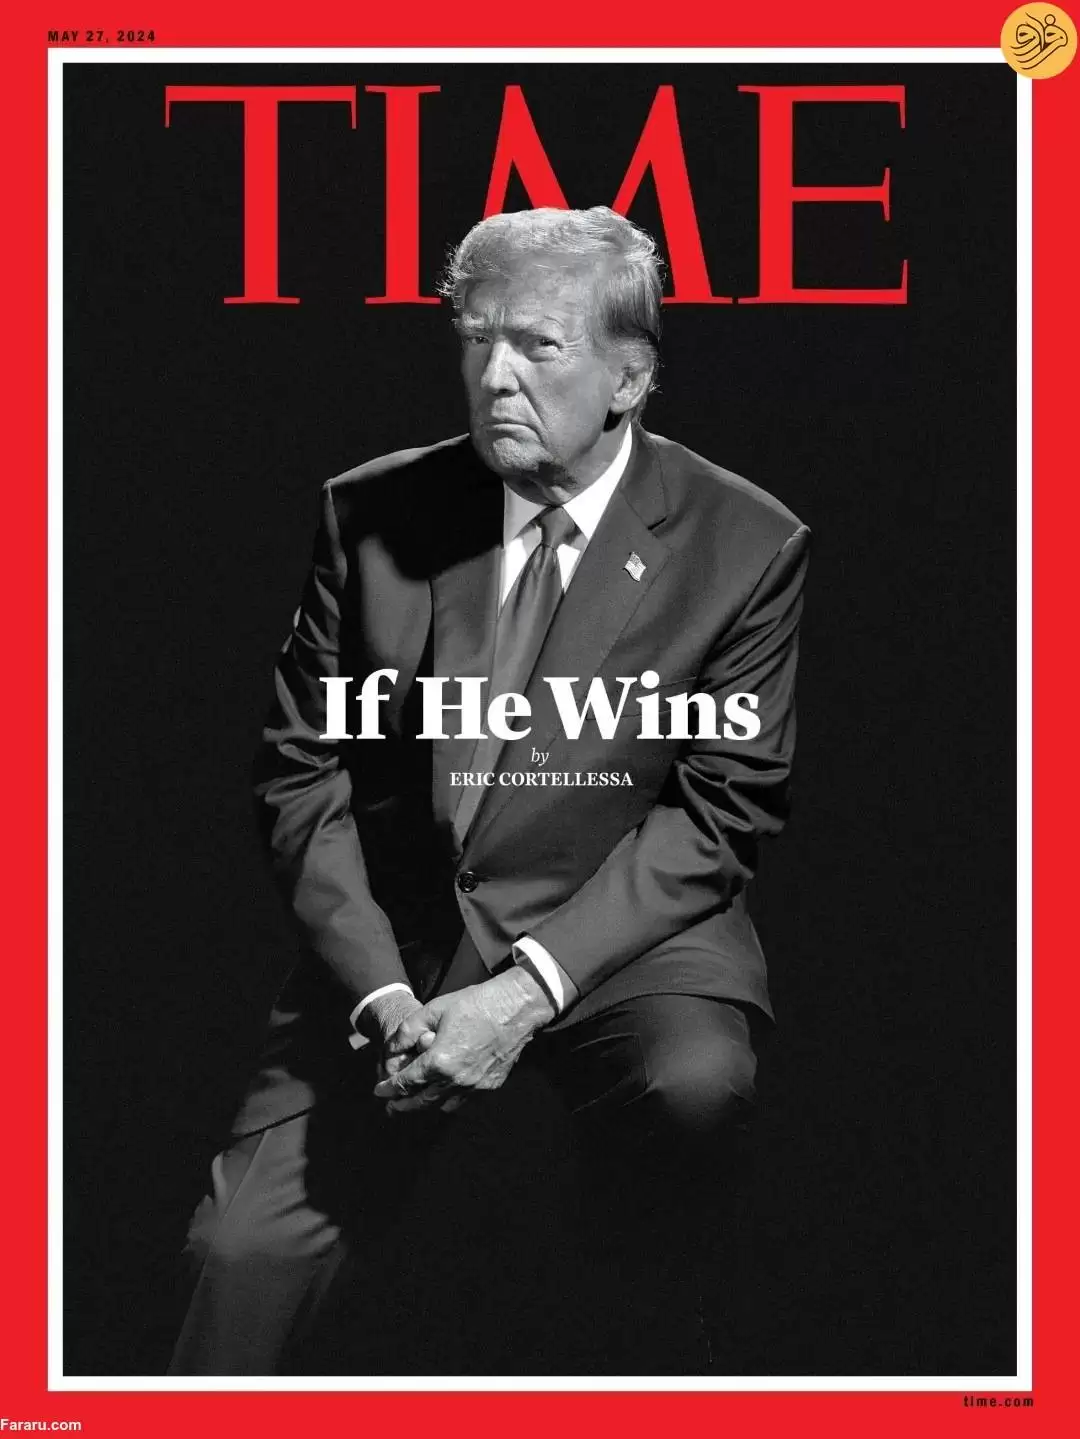 (عکس) دونالد ترامپ روی مجله تایم؛ (اگر او پیروز شود)